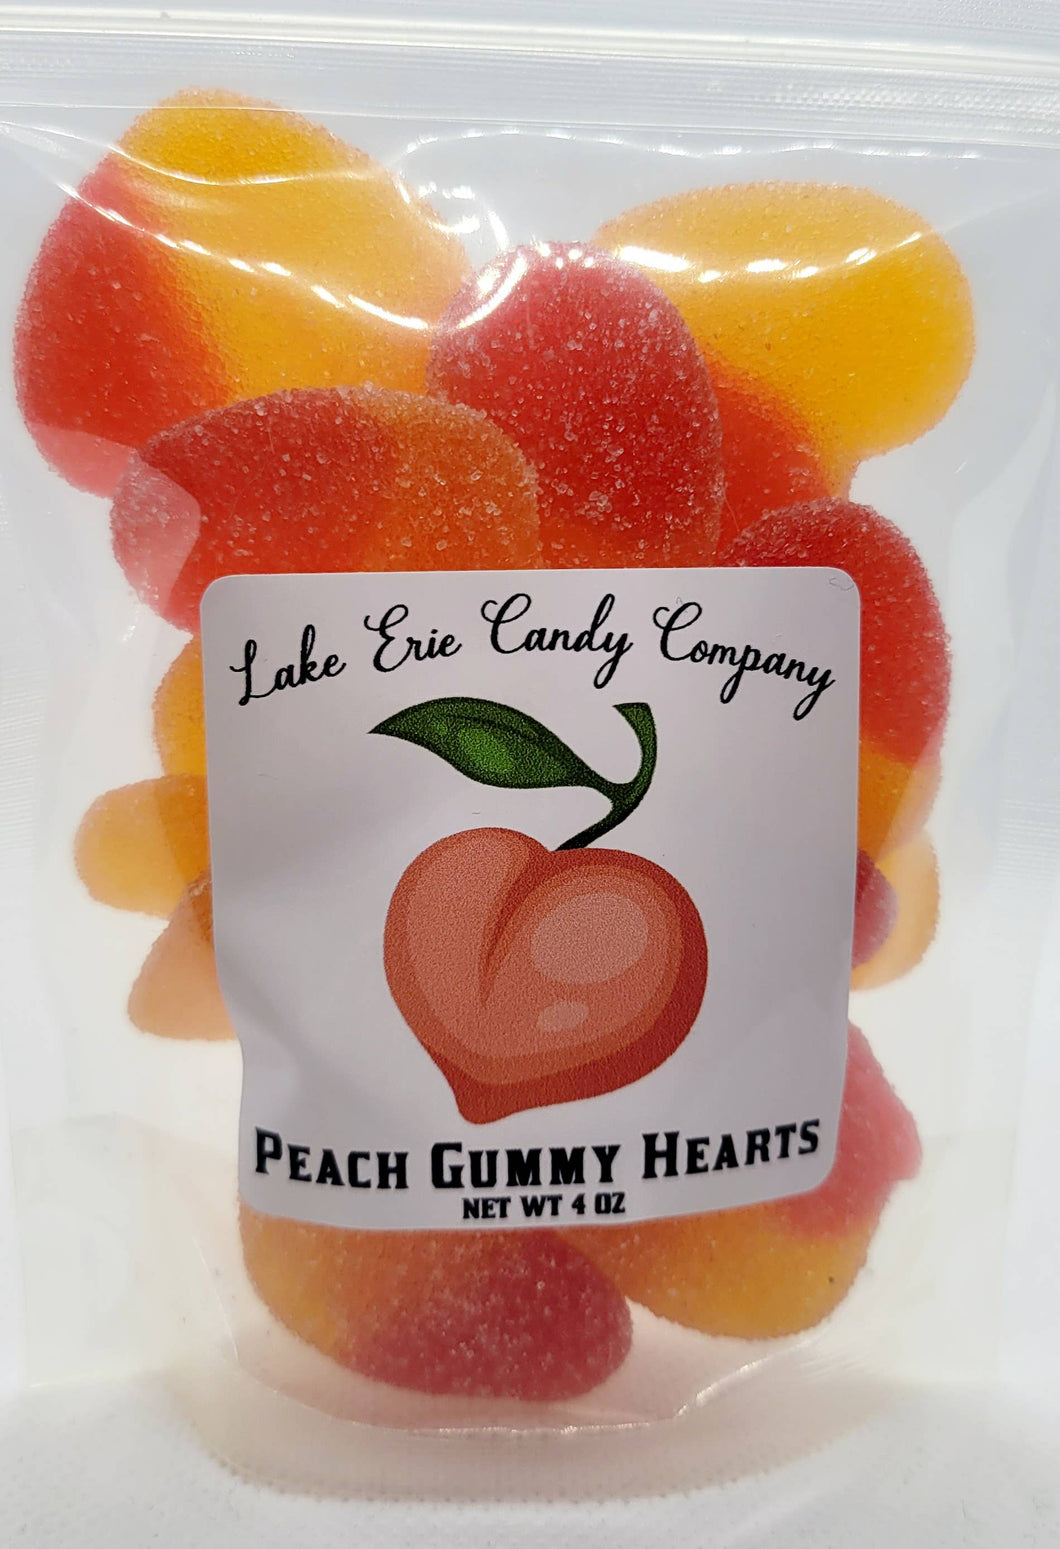 Lake Erie Candy Company - Peach Gummy Hearts